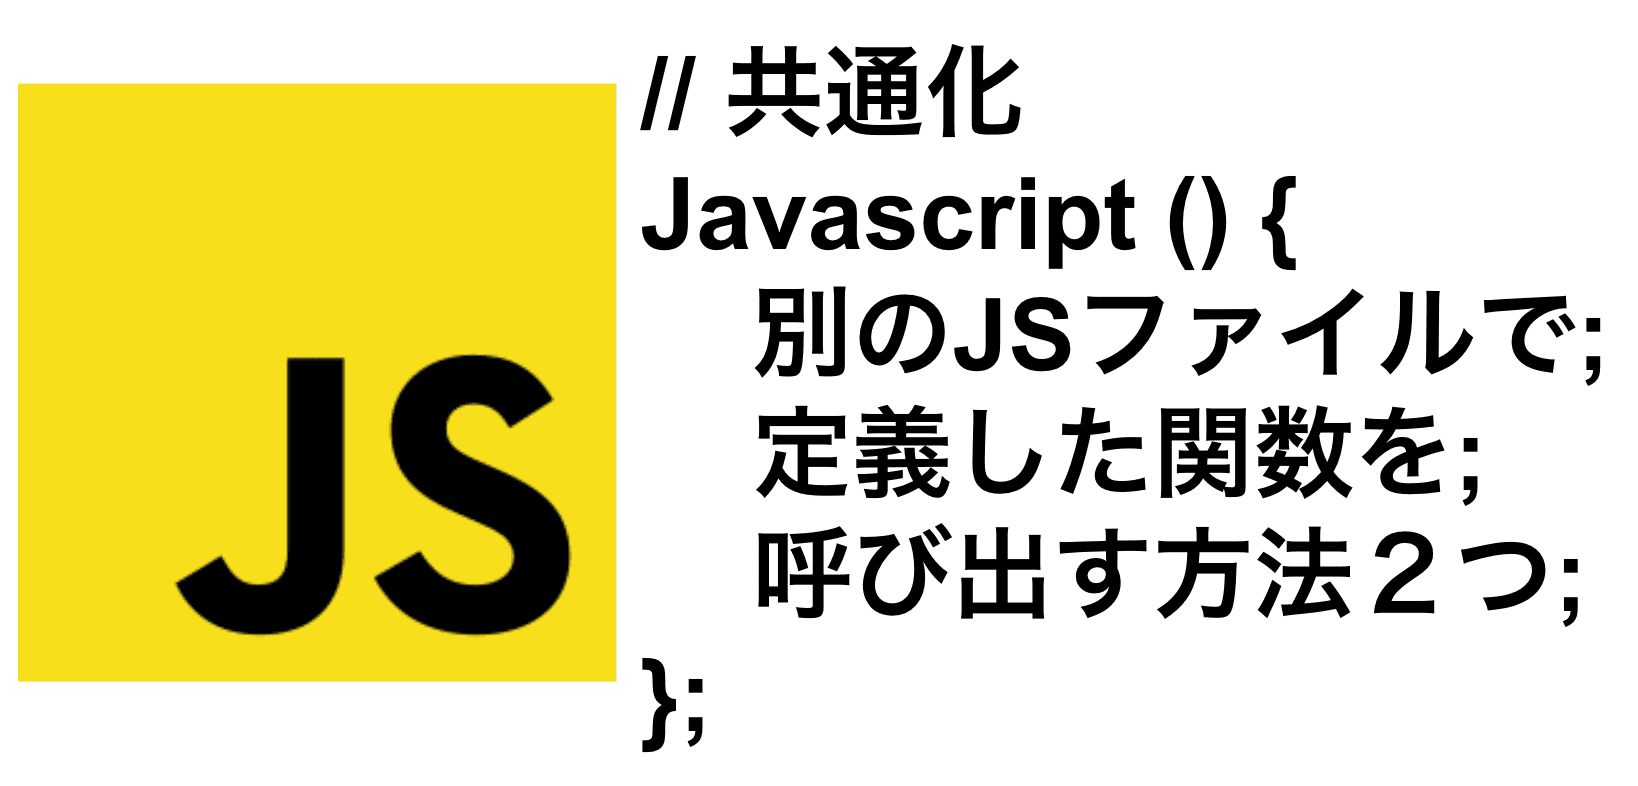 Javascript(){別のJSファイルで定義した関数を呼び出す方法２つ};//共通化